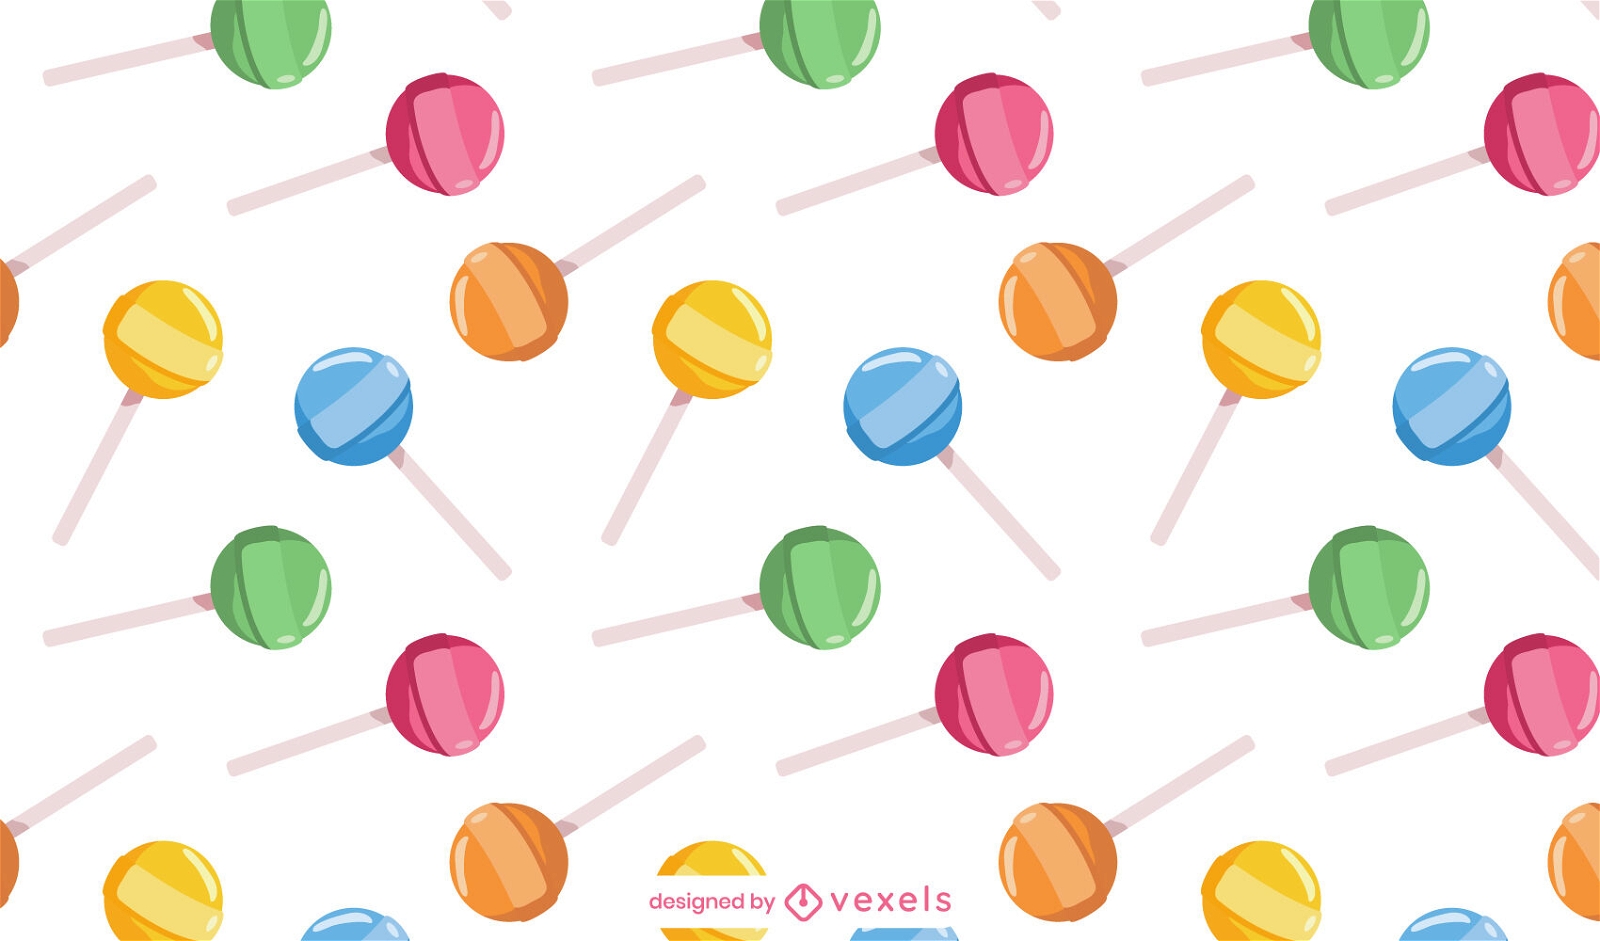 Colorful lollipop pattern design